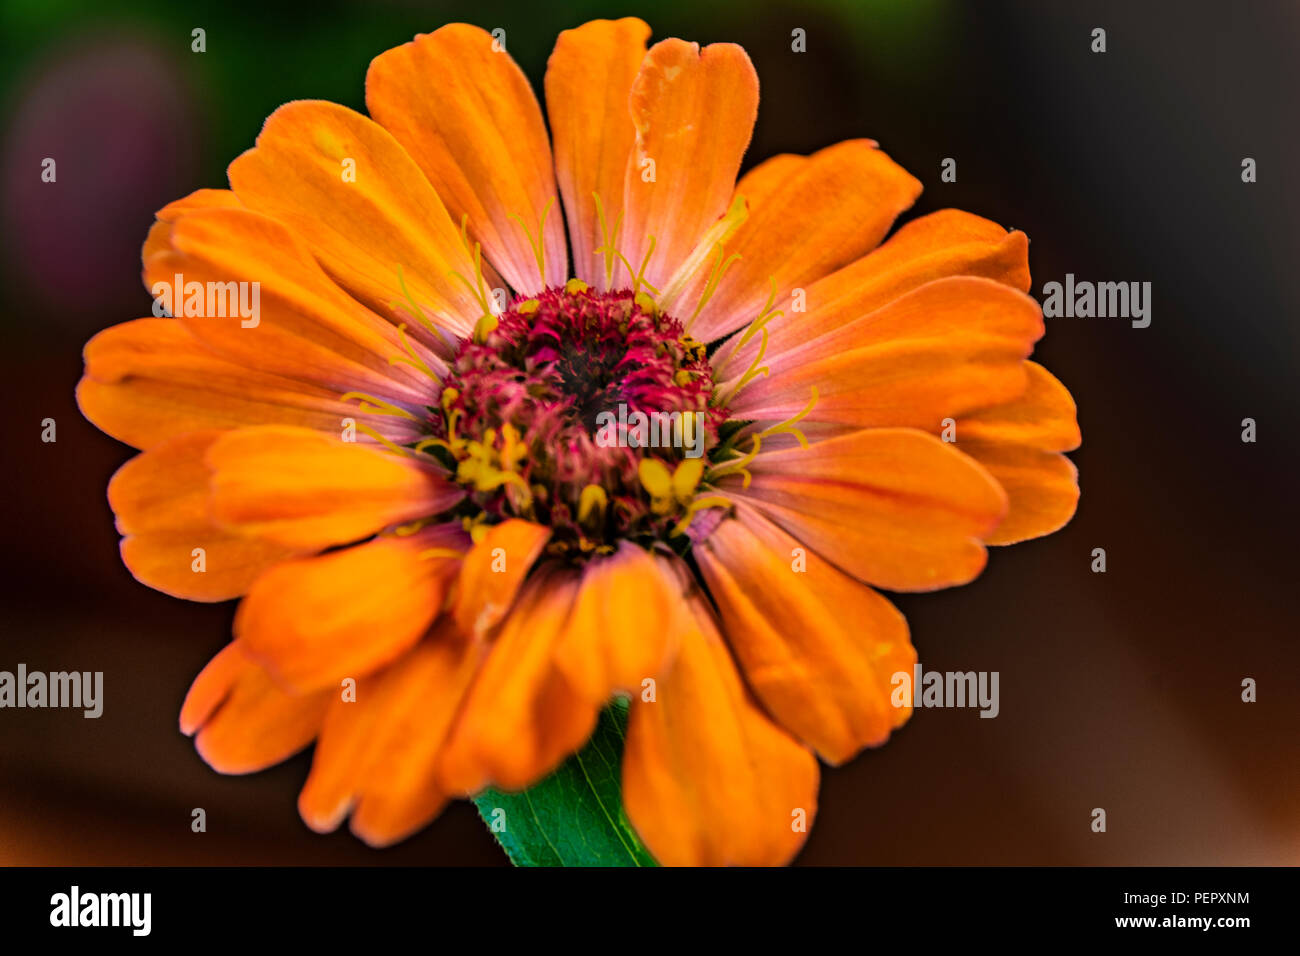 flower close-u of a orange daisy Stock Photo